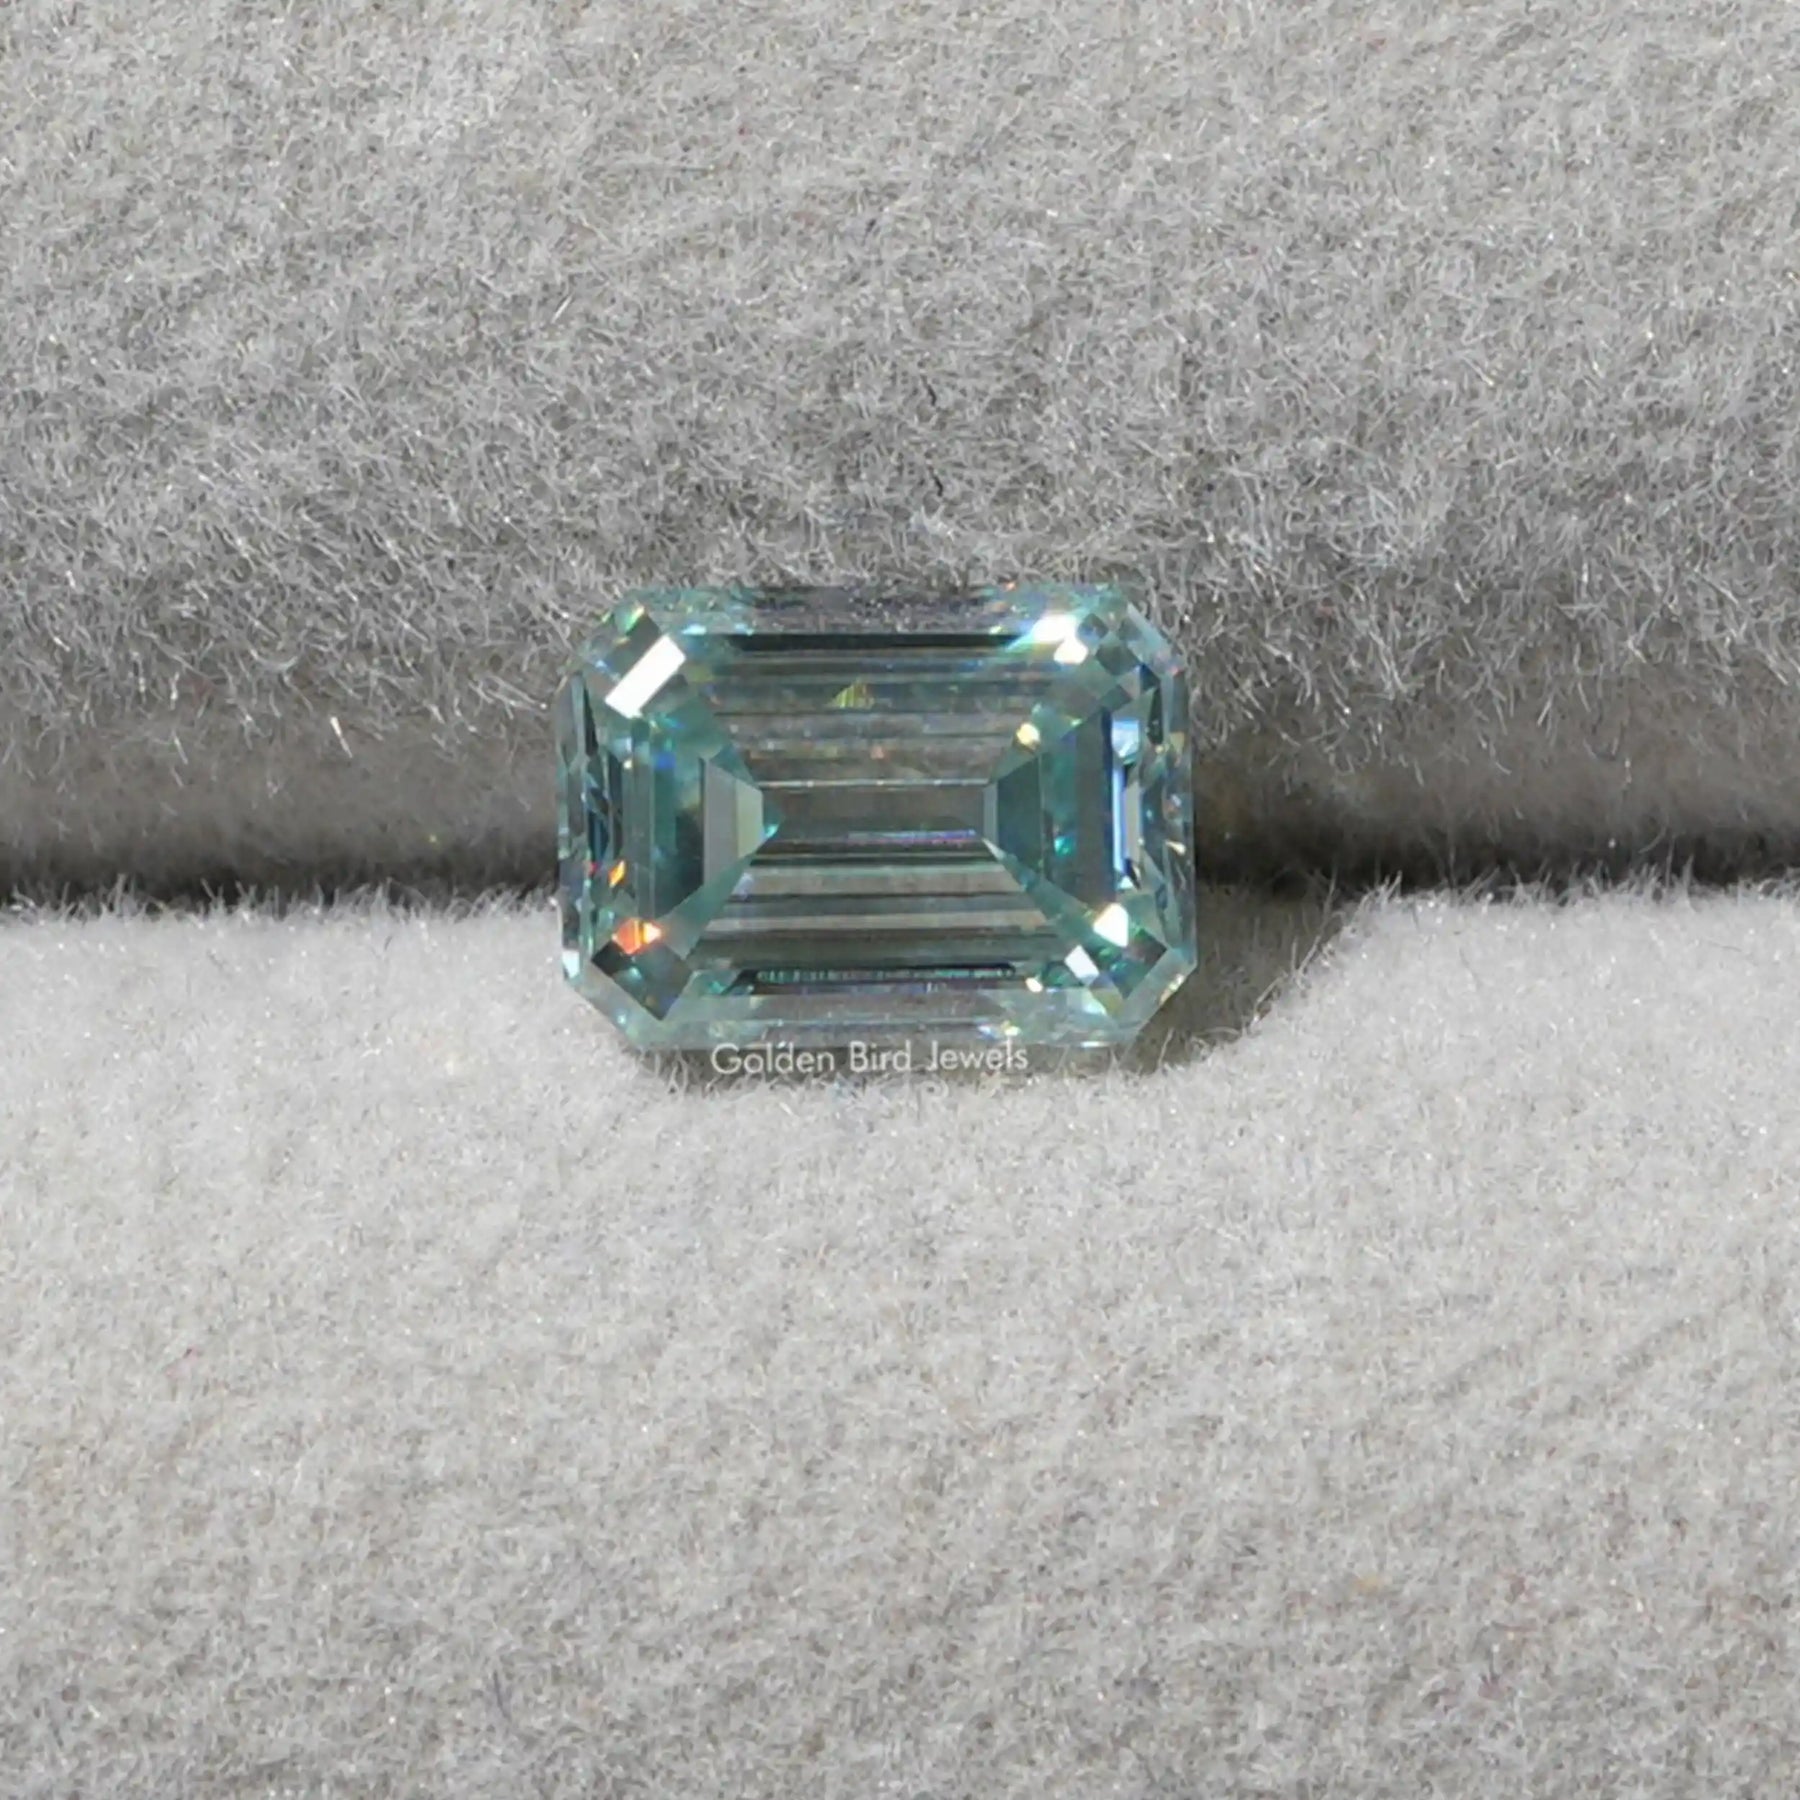 [Front view of aqua blue emerald cut loose moissanite made of vs clarity]-[Golden Bird Jewels]